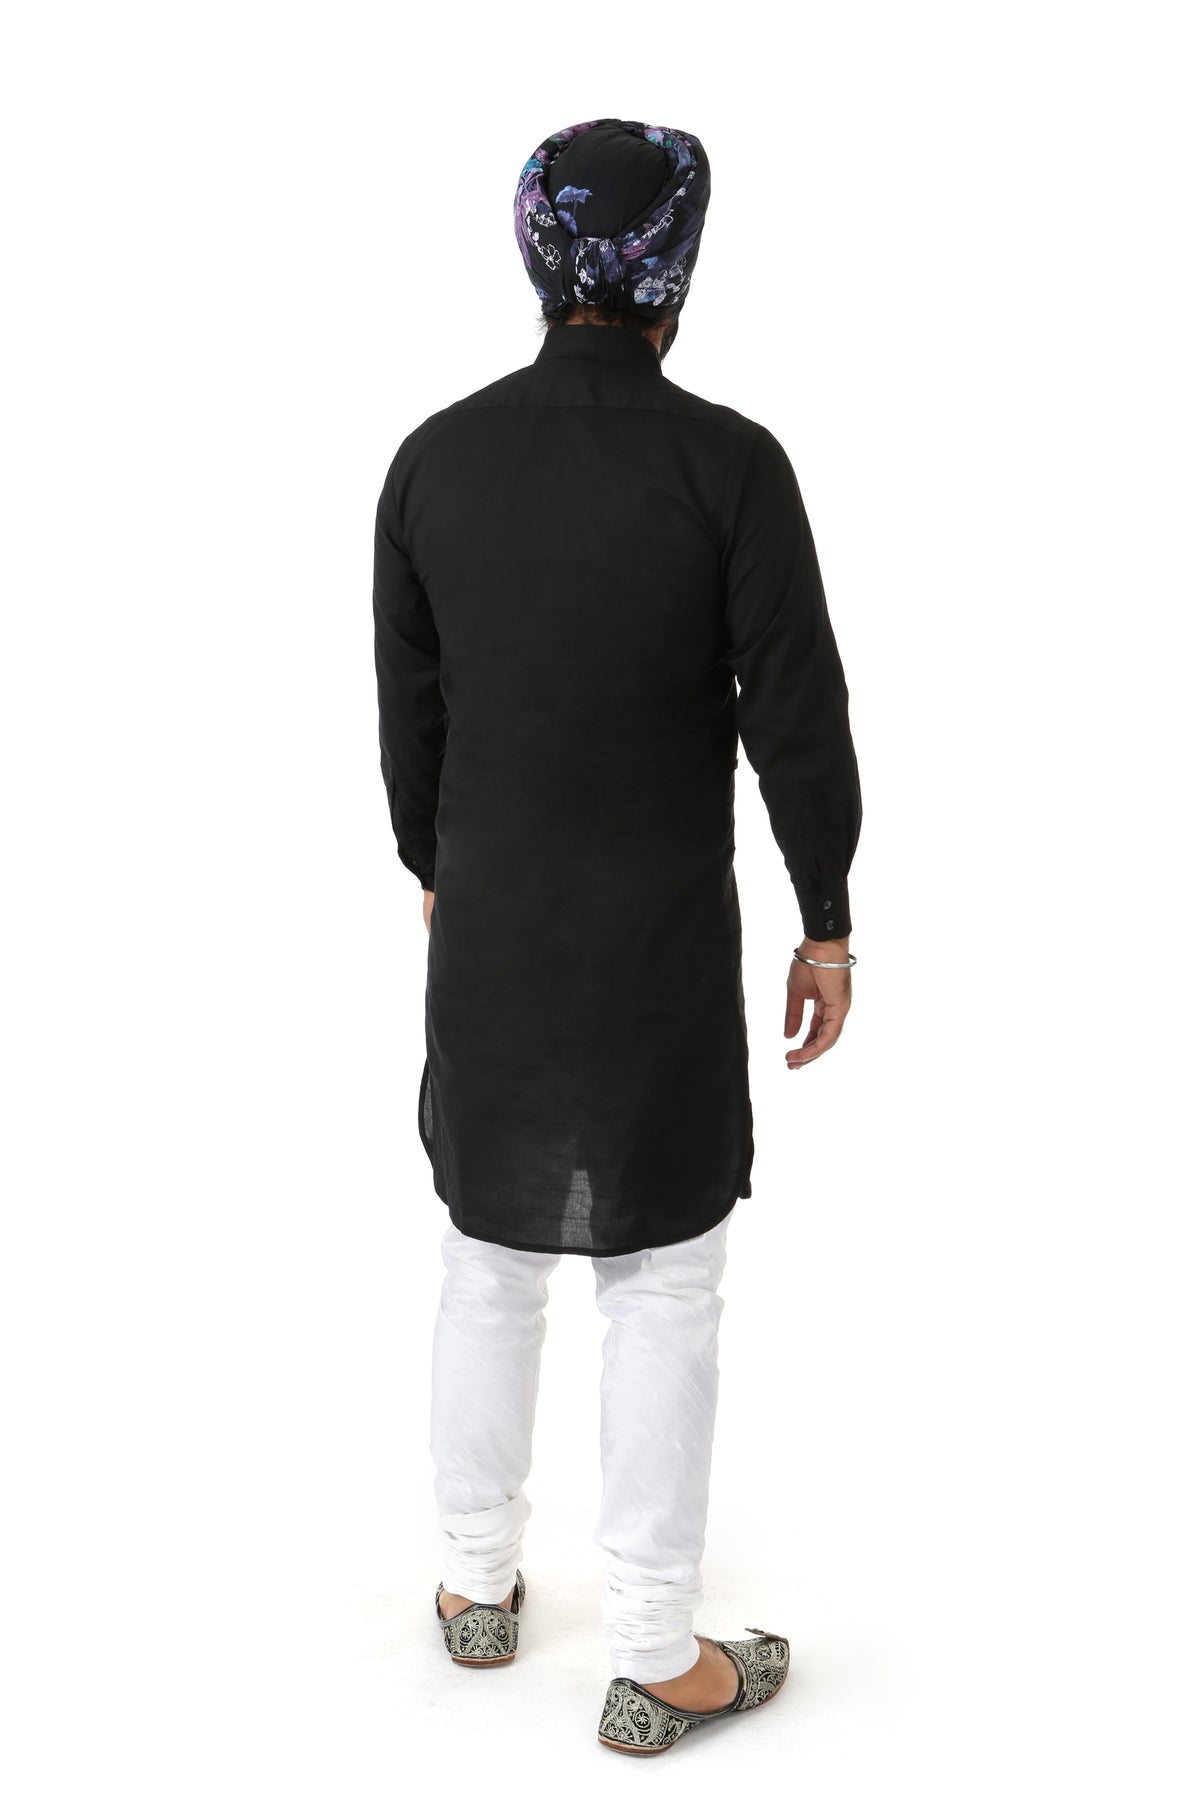 RAAYA Classic Cotton Kurta Shirt Long Sleeve - Back View - Harleen Kaur - Indian Menswear